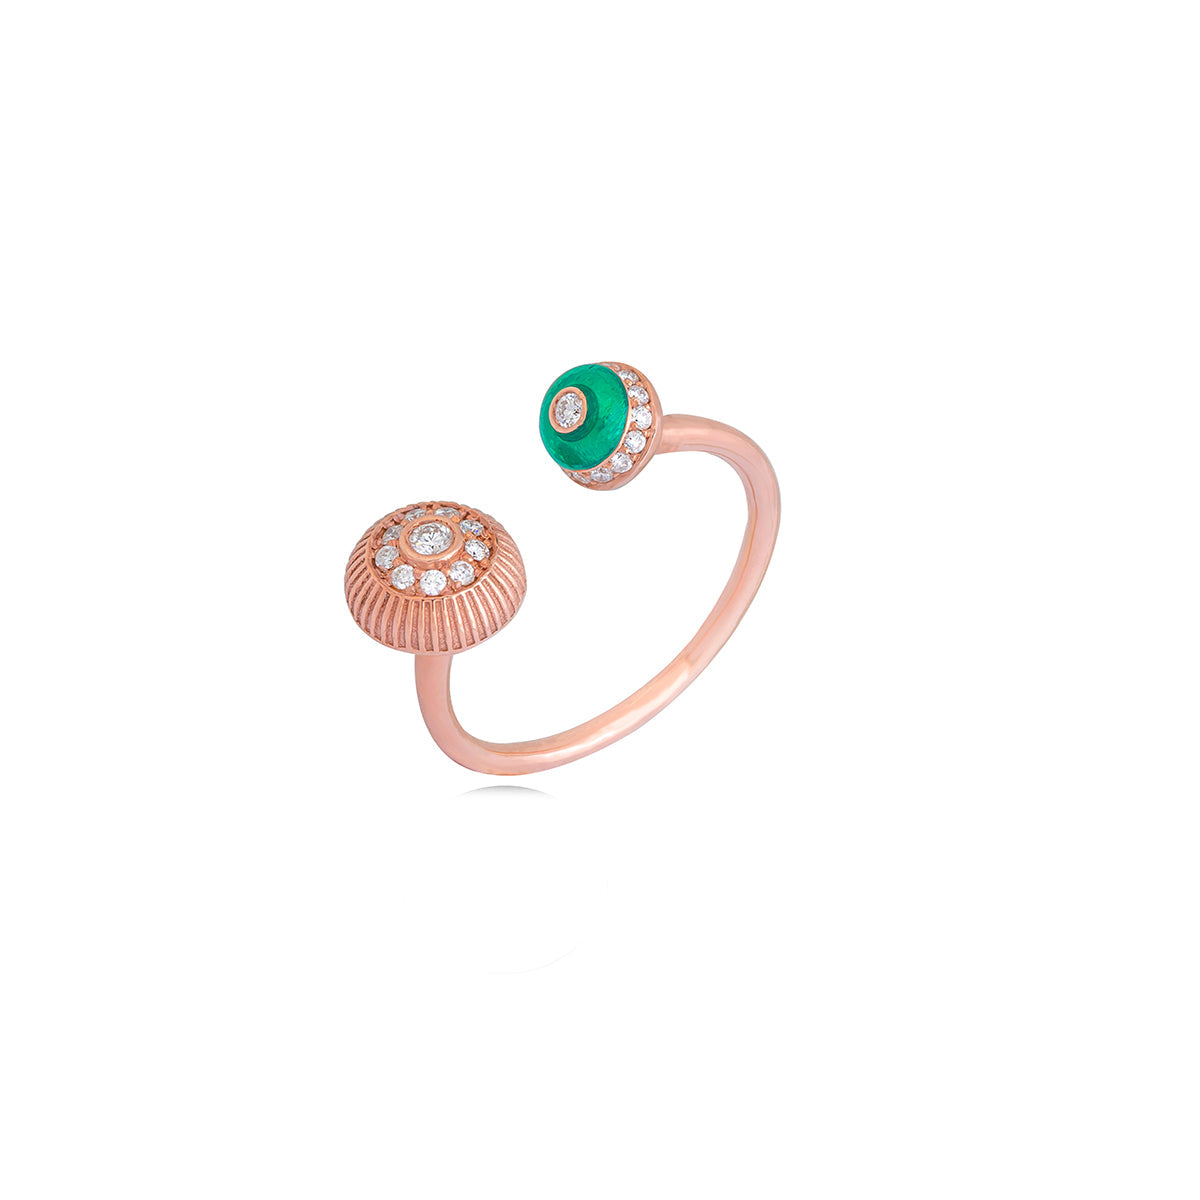 Emerald Green Enamel Diamond Ring in 18k Gold